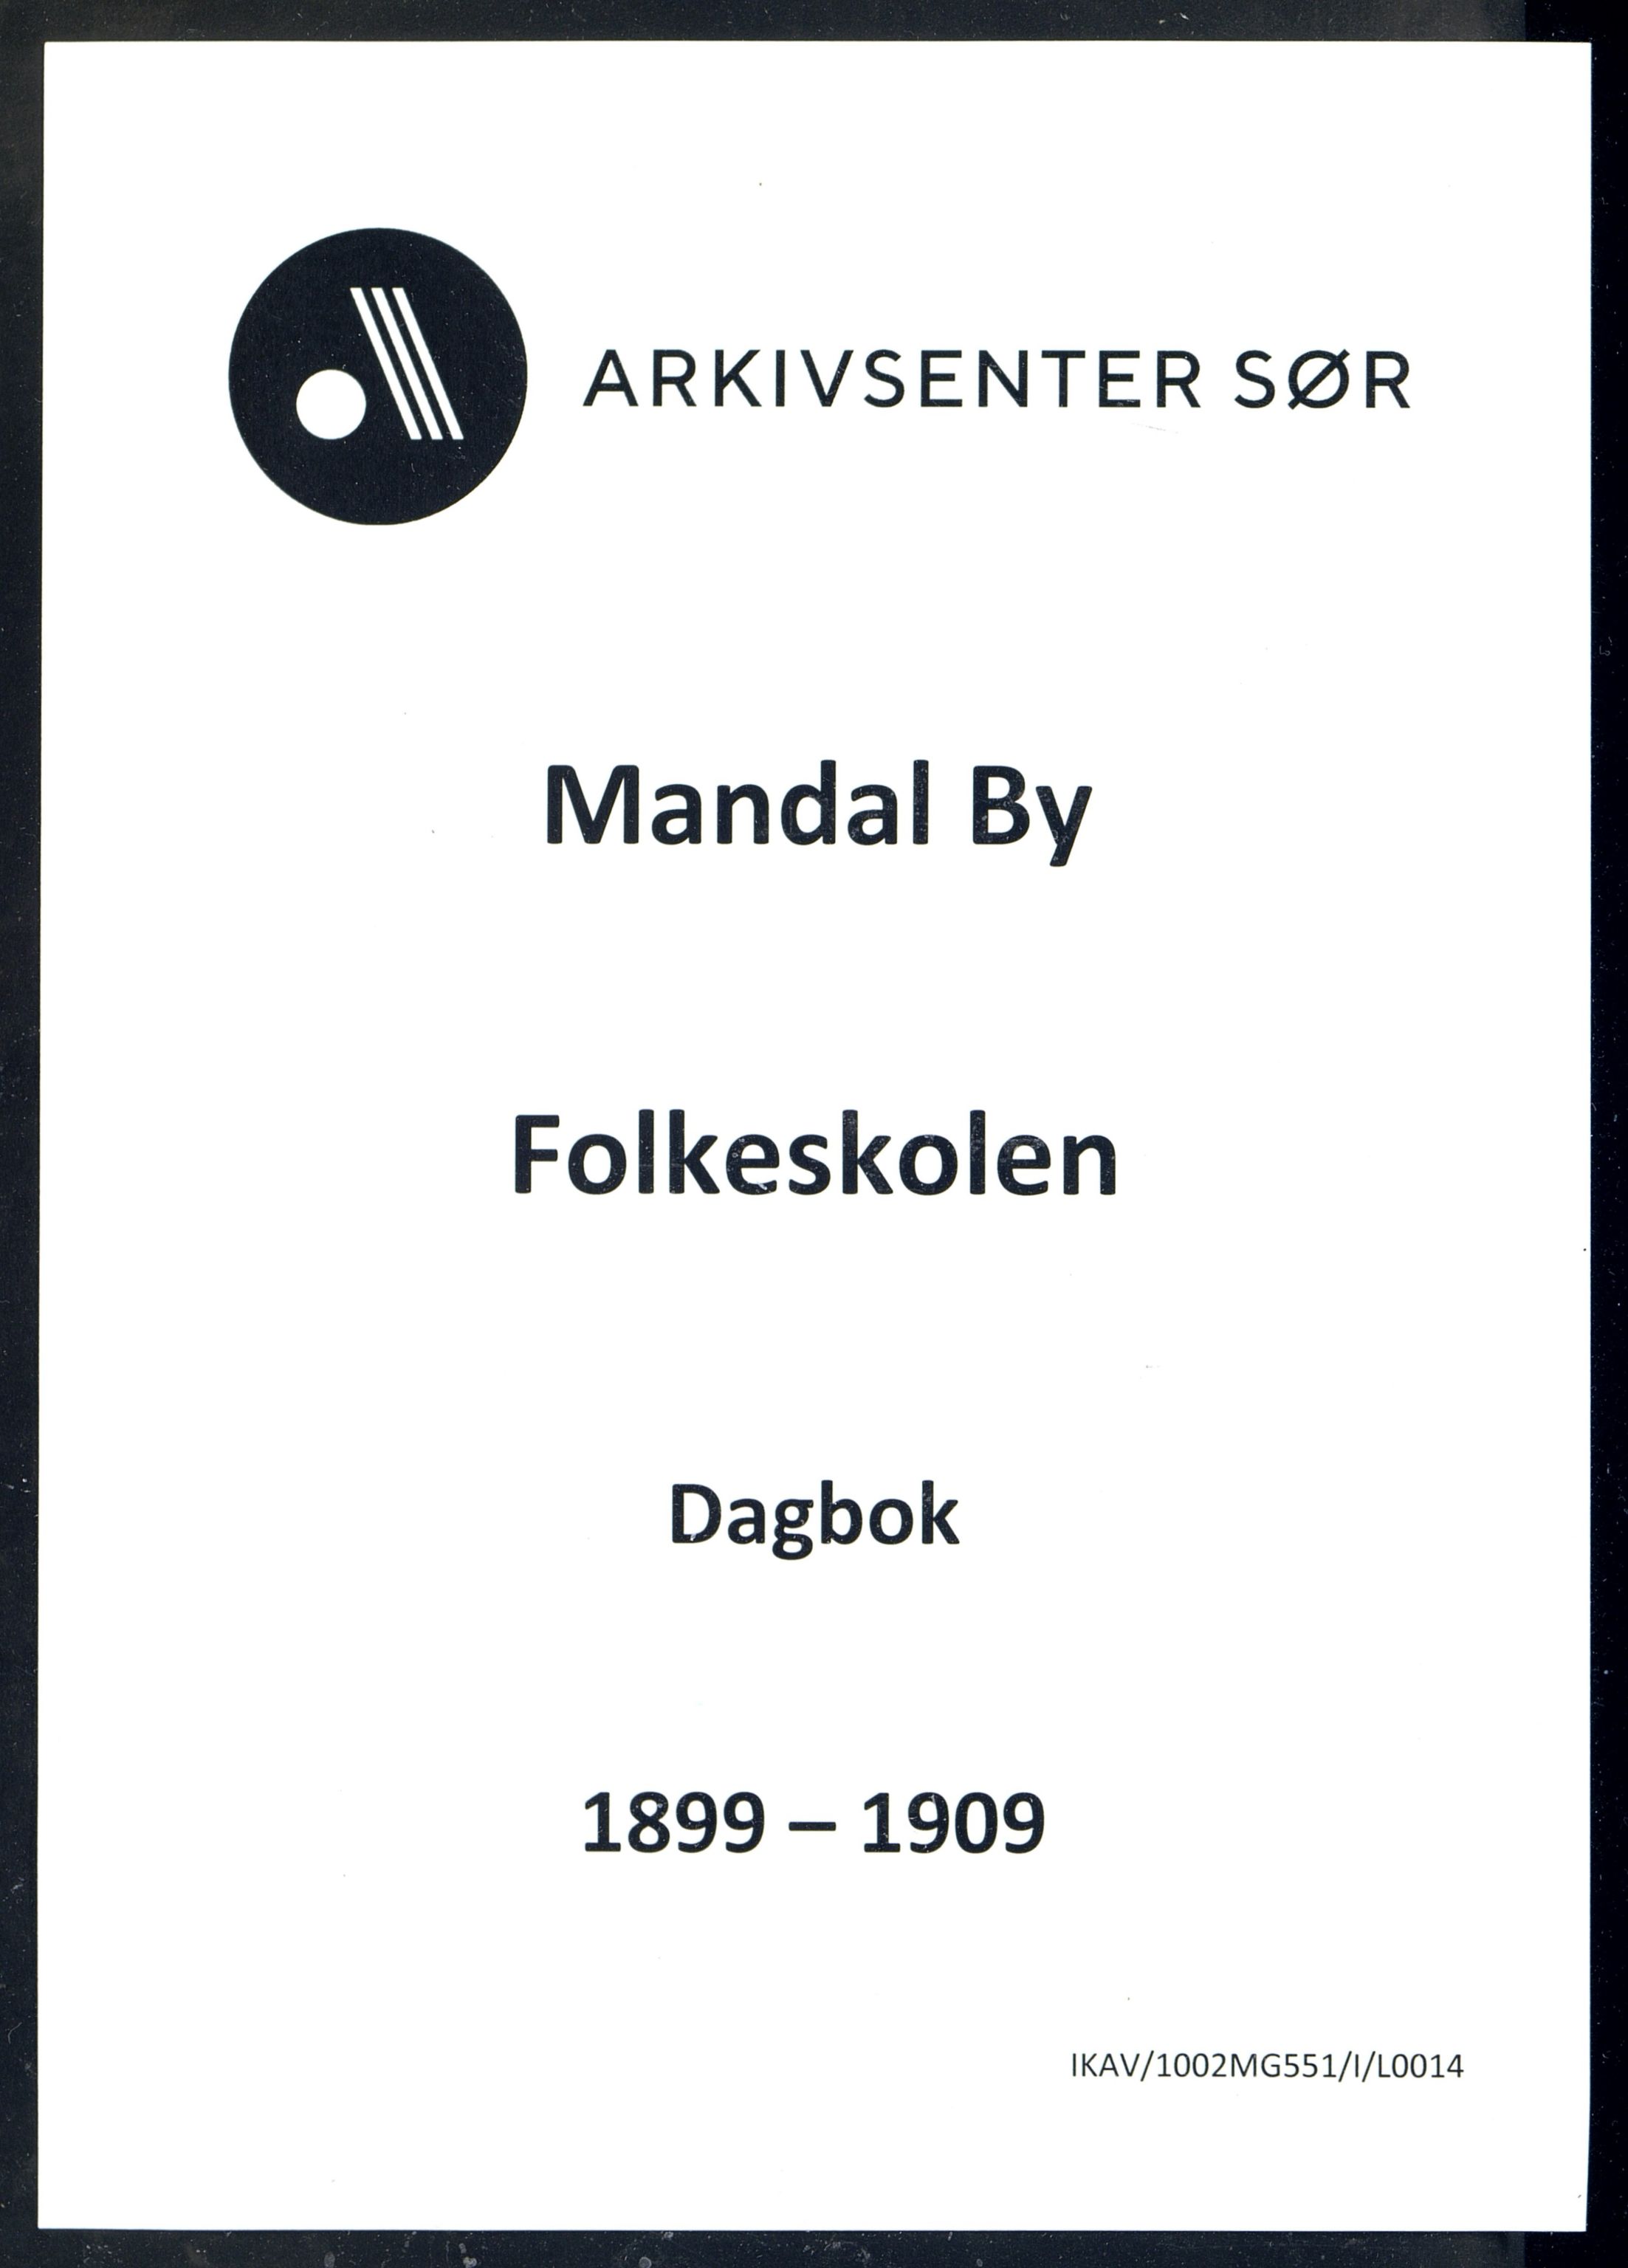 Mandal By - Mandal Allmueskole/Folkeskole/Skole, IKAV/1002MG551/I/L0015: Dagbok, 1899-1909